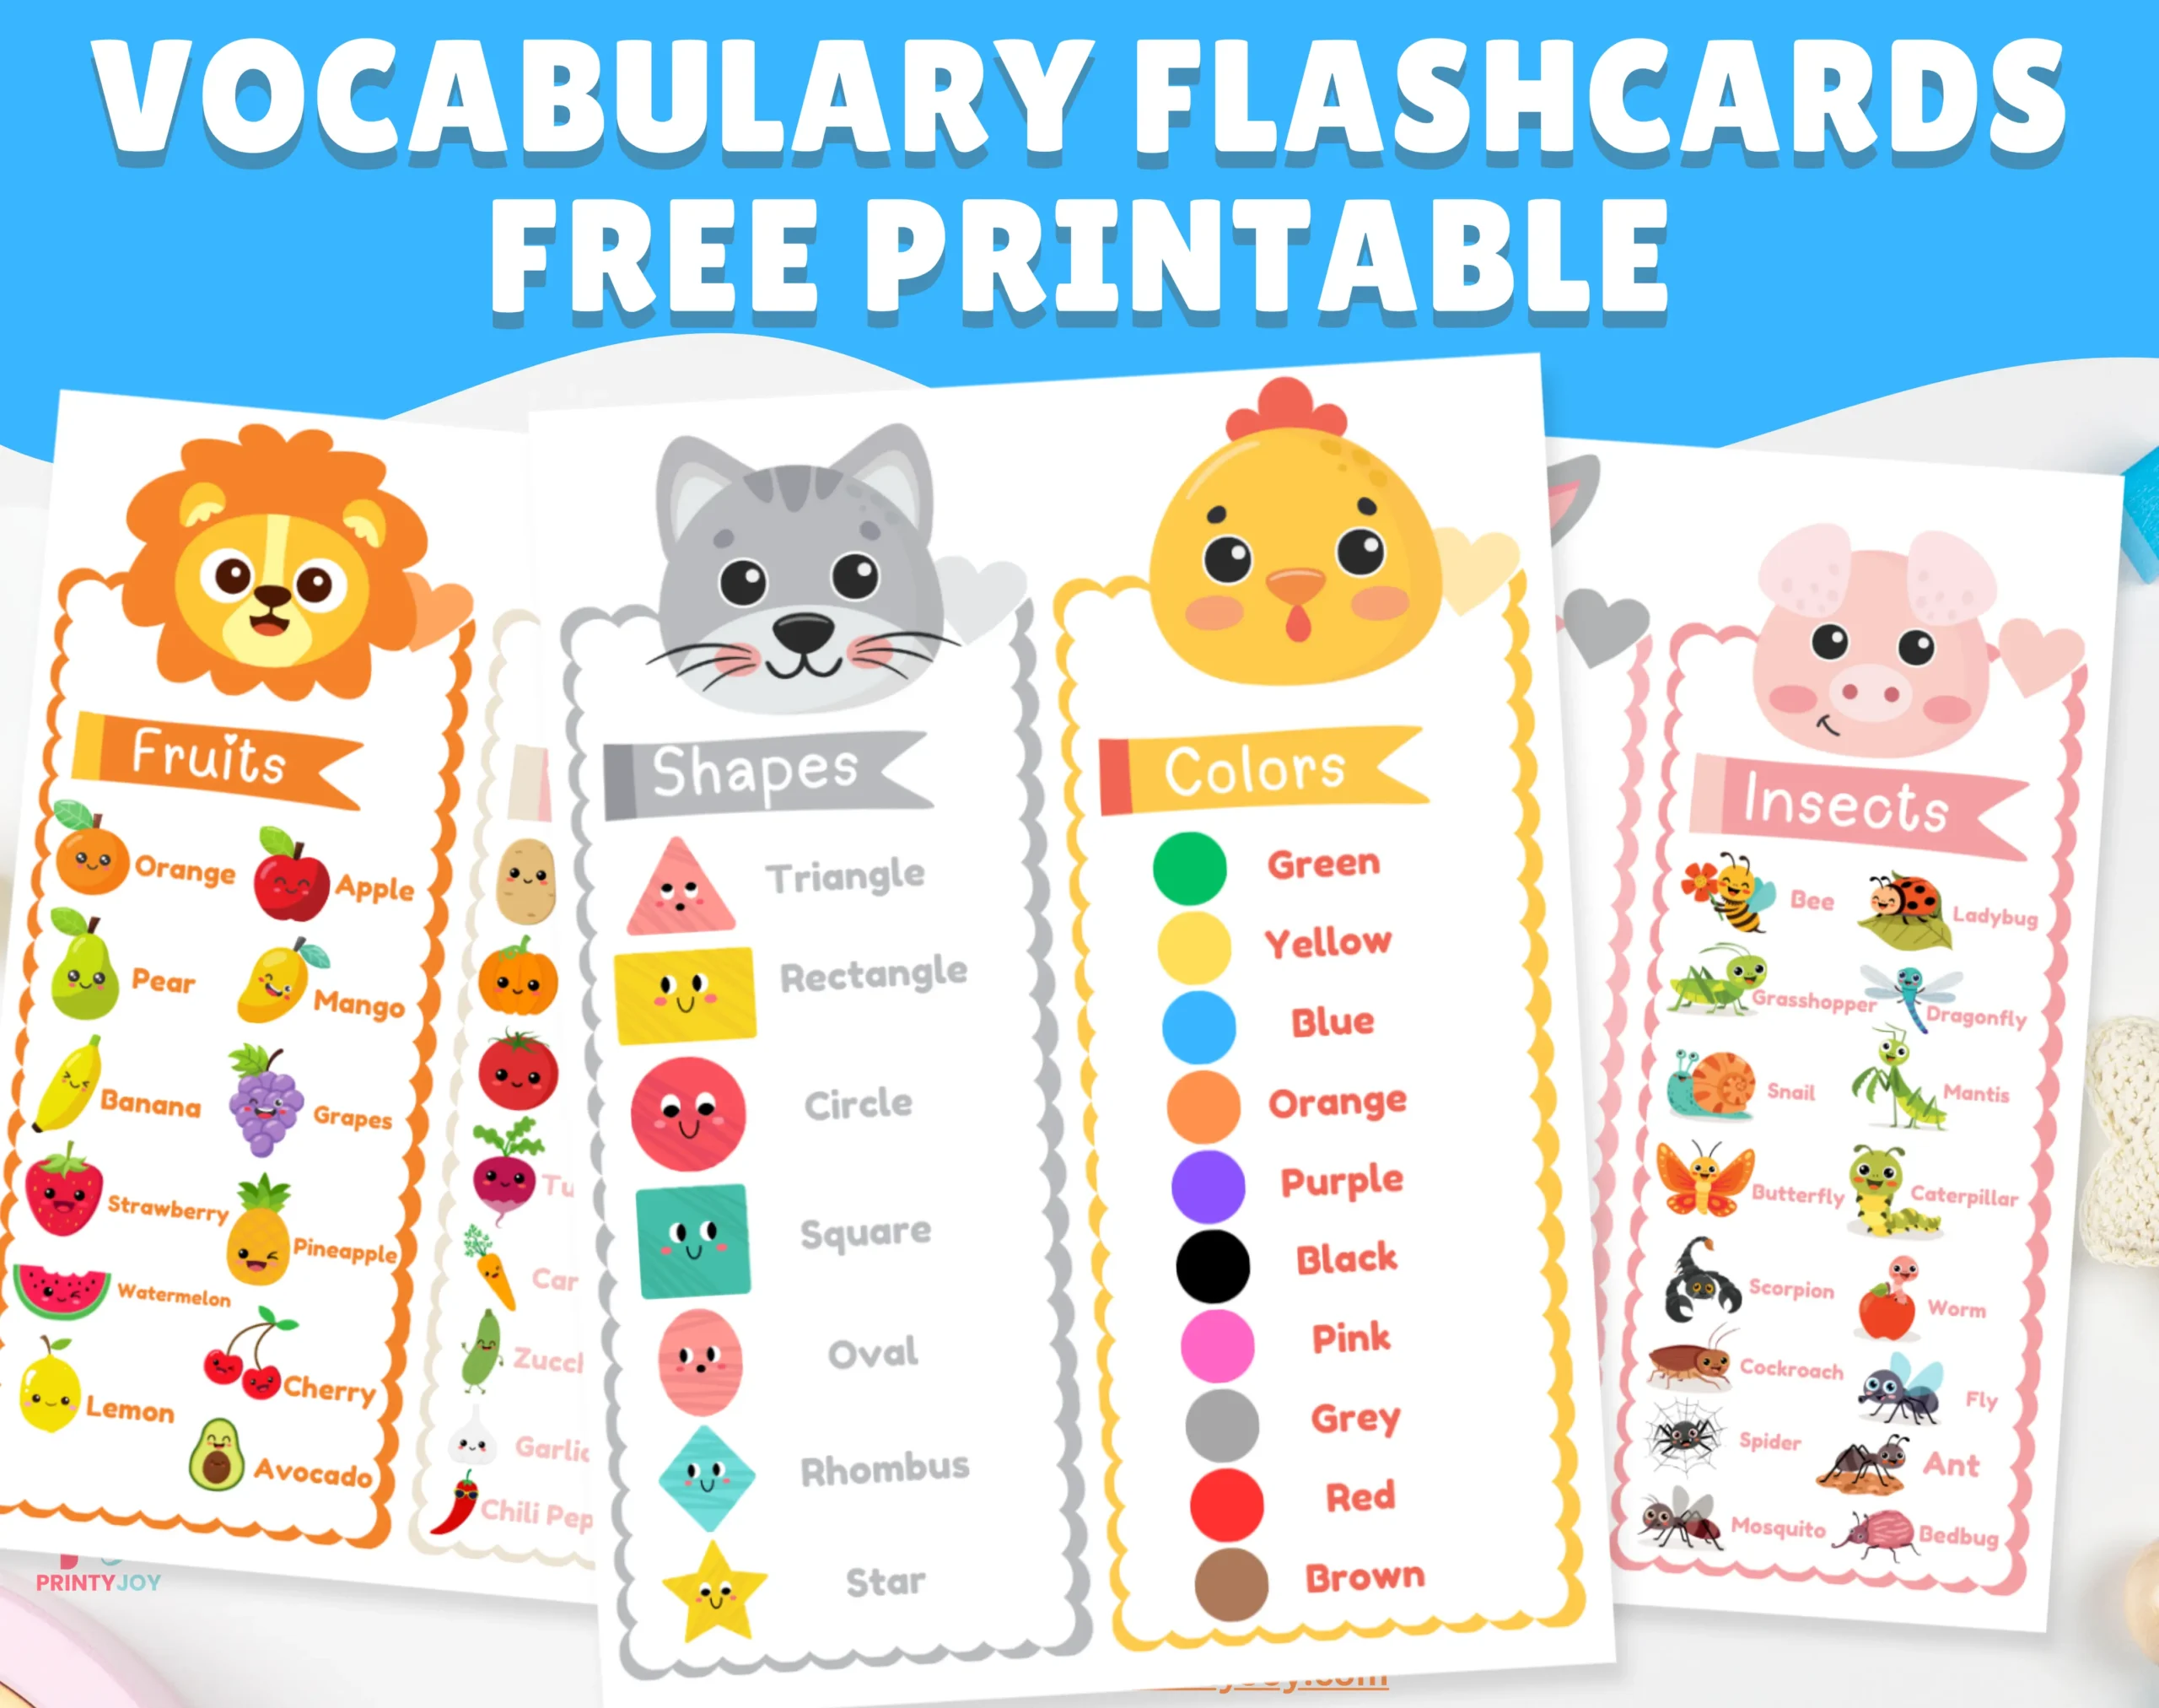 Vocabulary Flashcards Free Printable